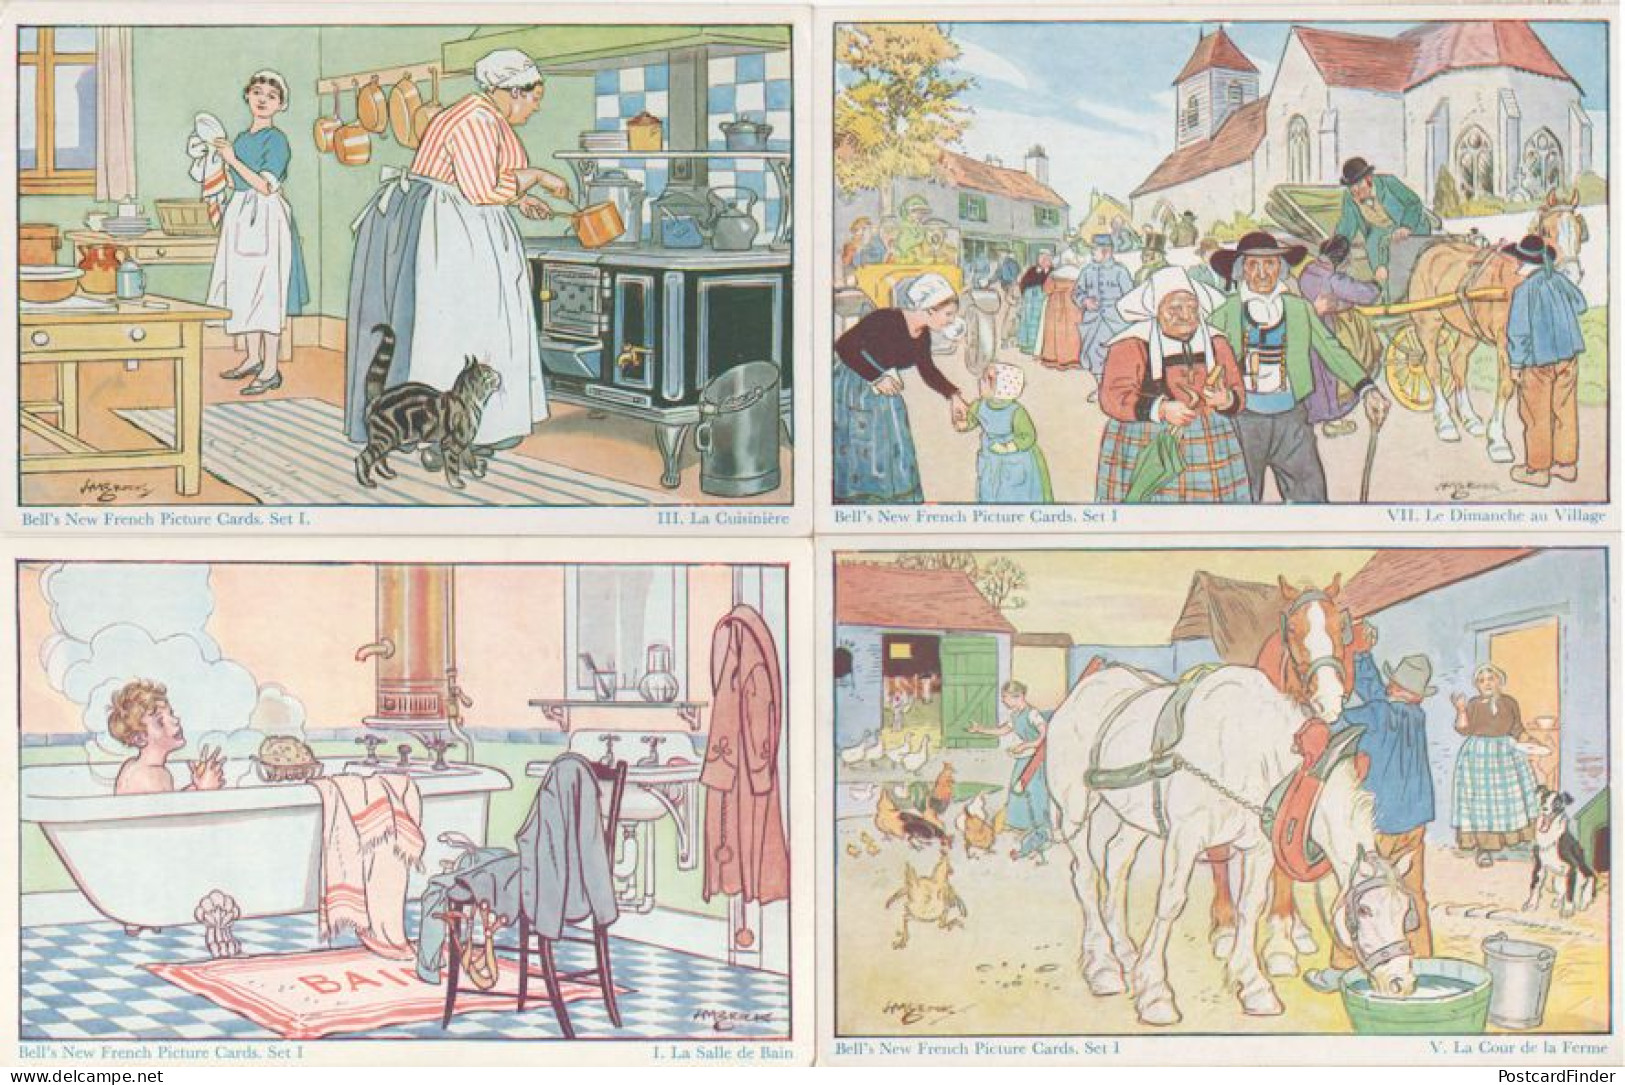 French Bathroom Kitchen Farm Village 4x Drawing Old Postcard S - Colecciones Y Lotes